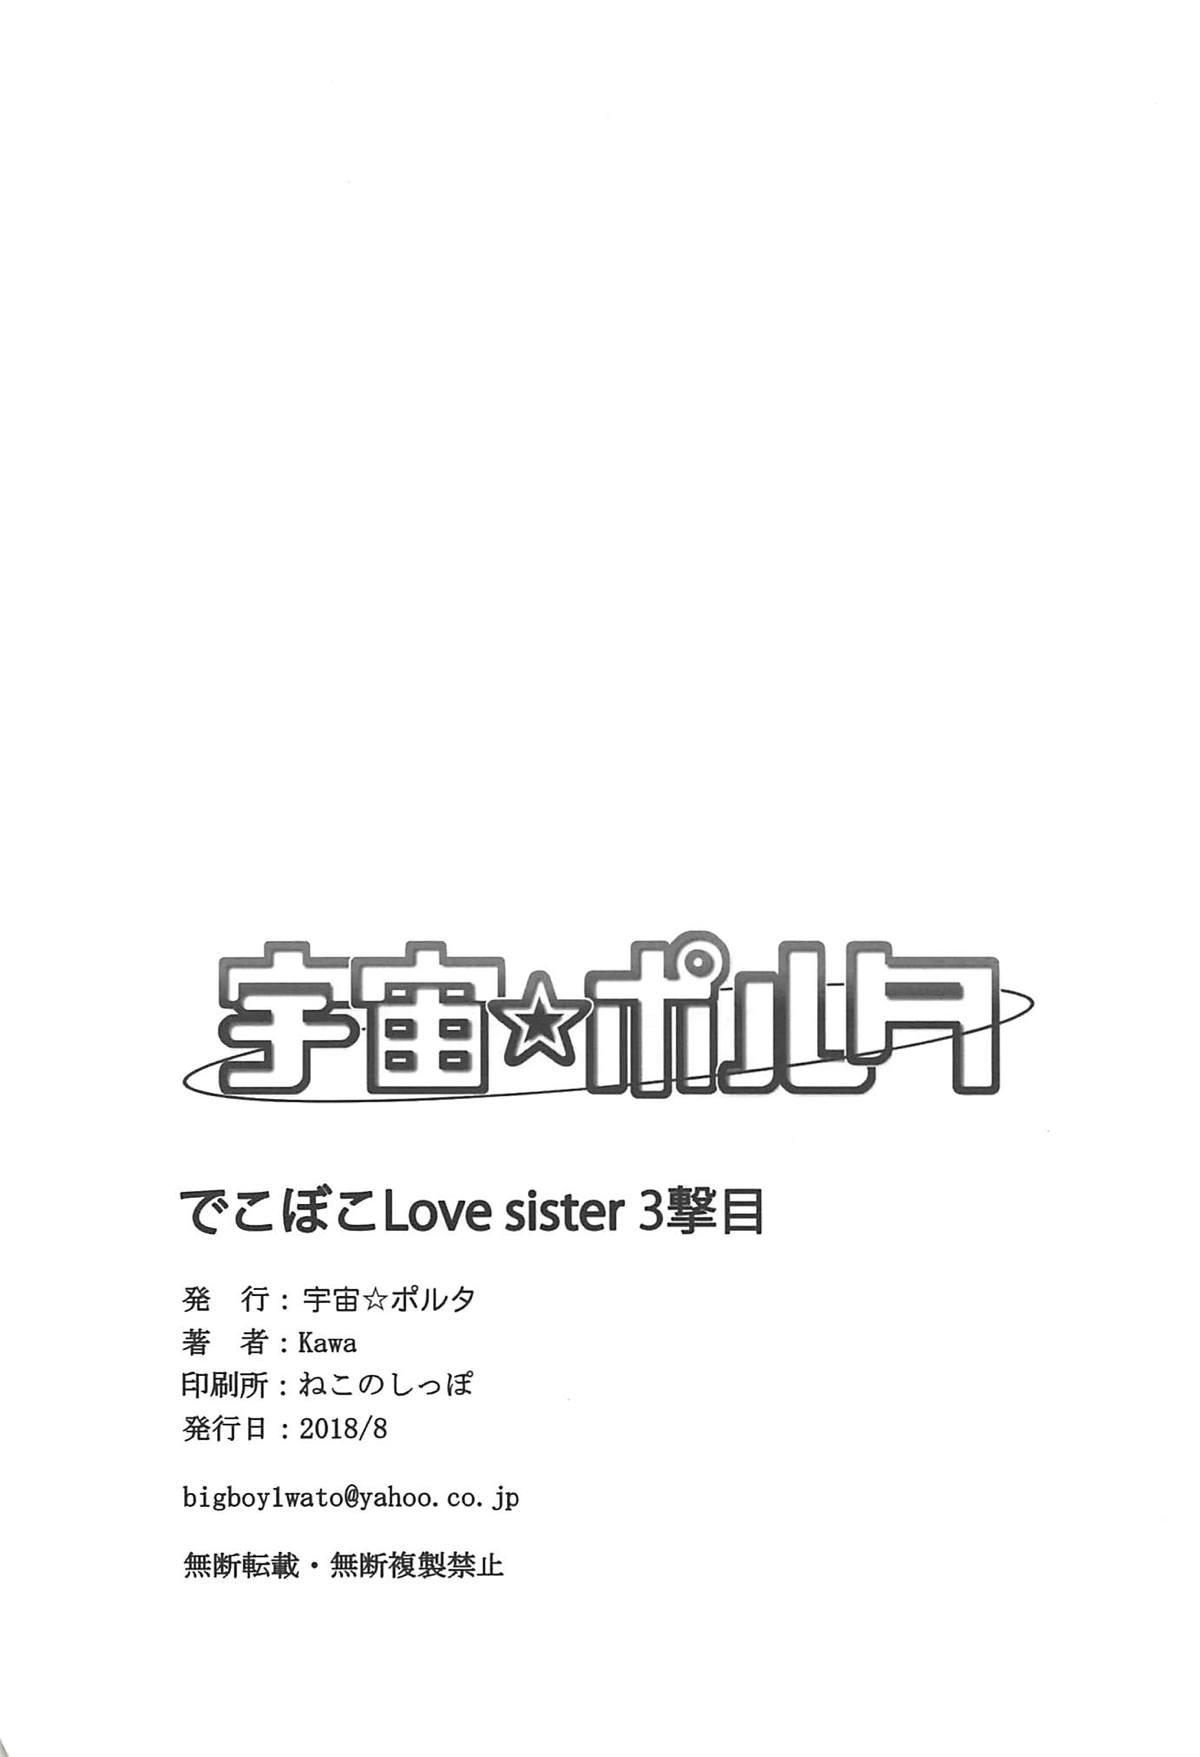 Dekoboko Love sister 3-gekime 40